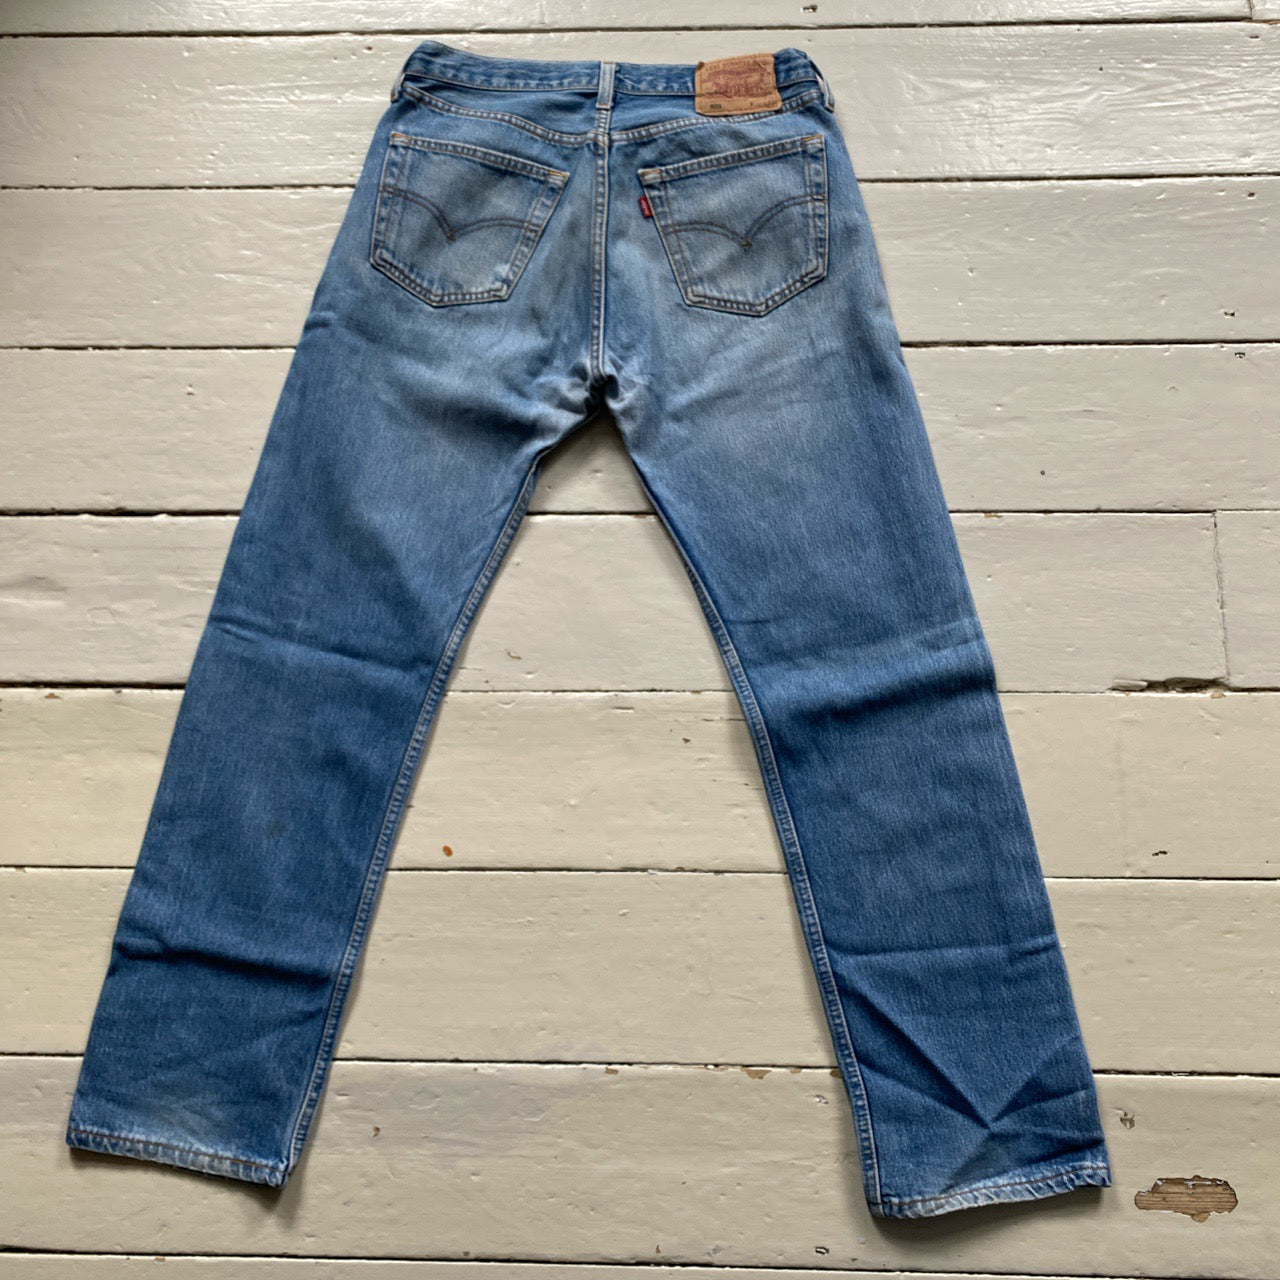 Levis 501 Distressed Jeans (32/32)